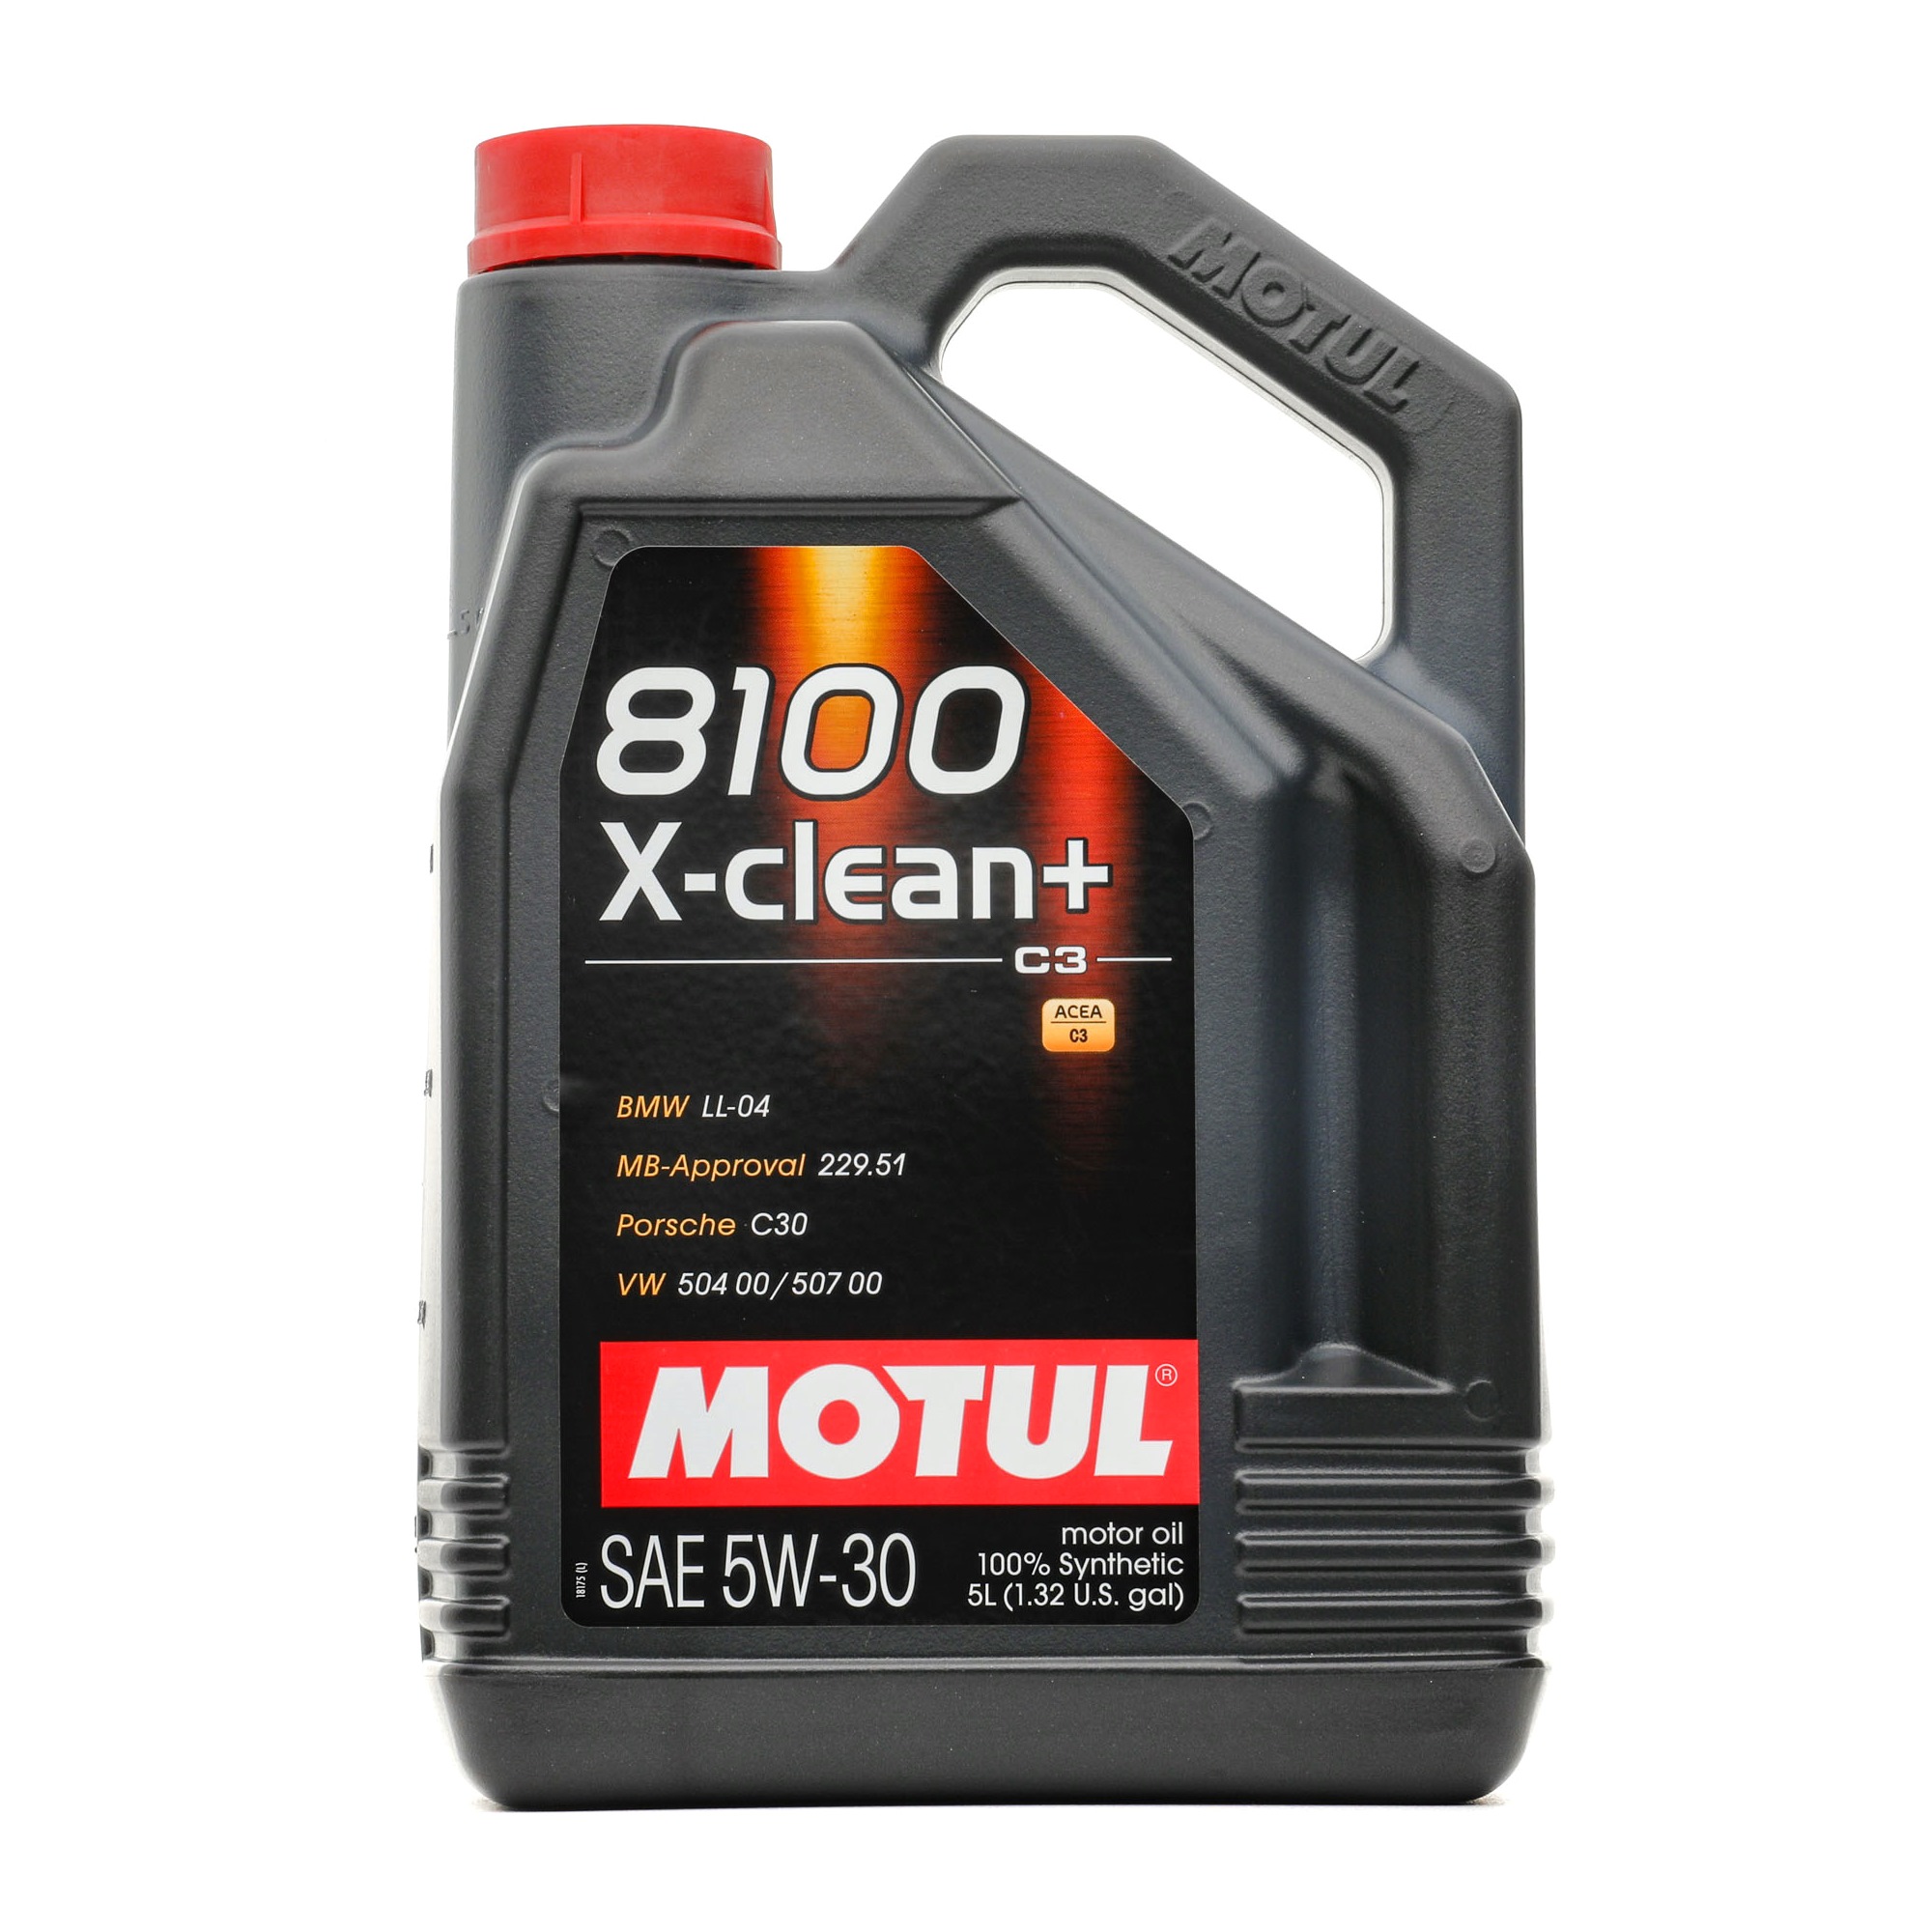 Buy Car oil MOTUL diesel 109220 8100, X-CLEAN+ 5W-30, 5l